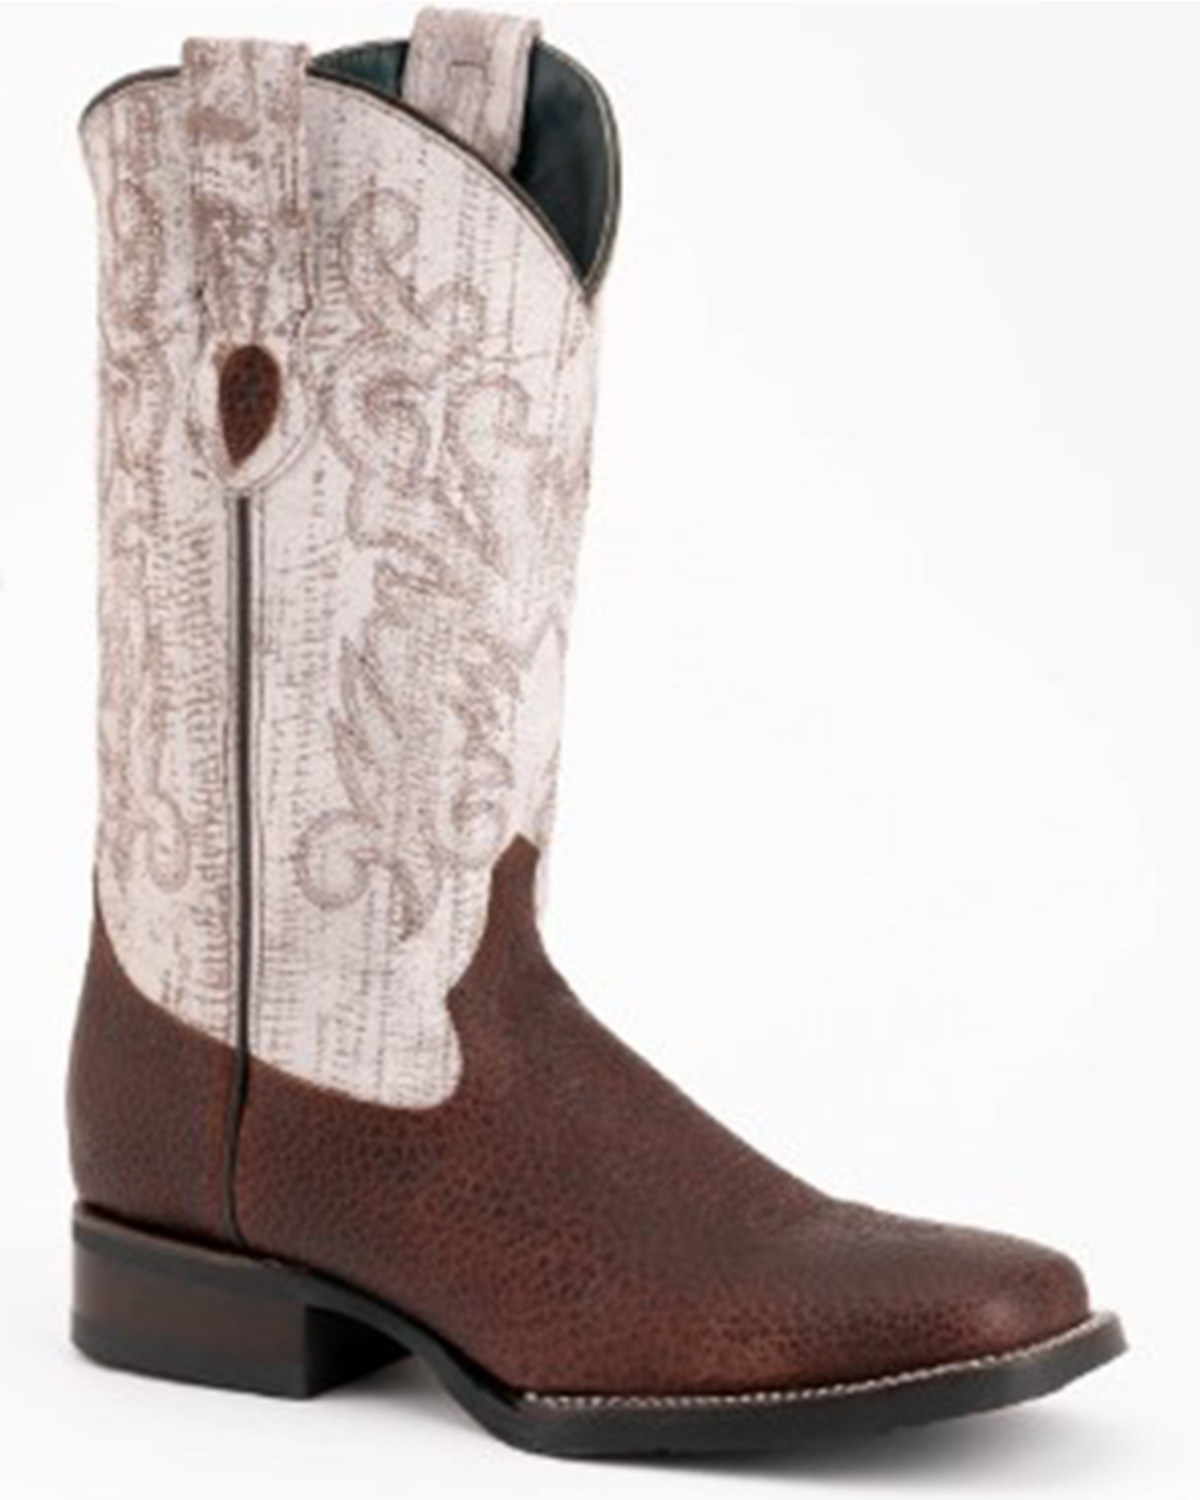 Ferrini Men's Toro Rugged Western Performance Boots - Square Toe